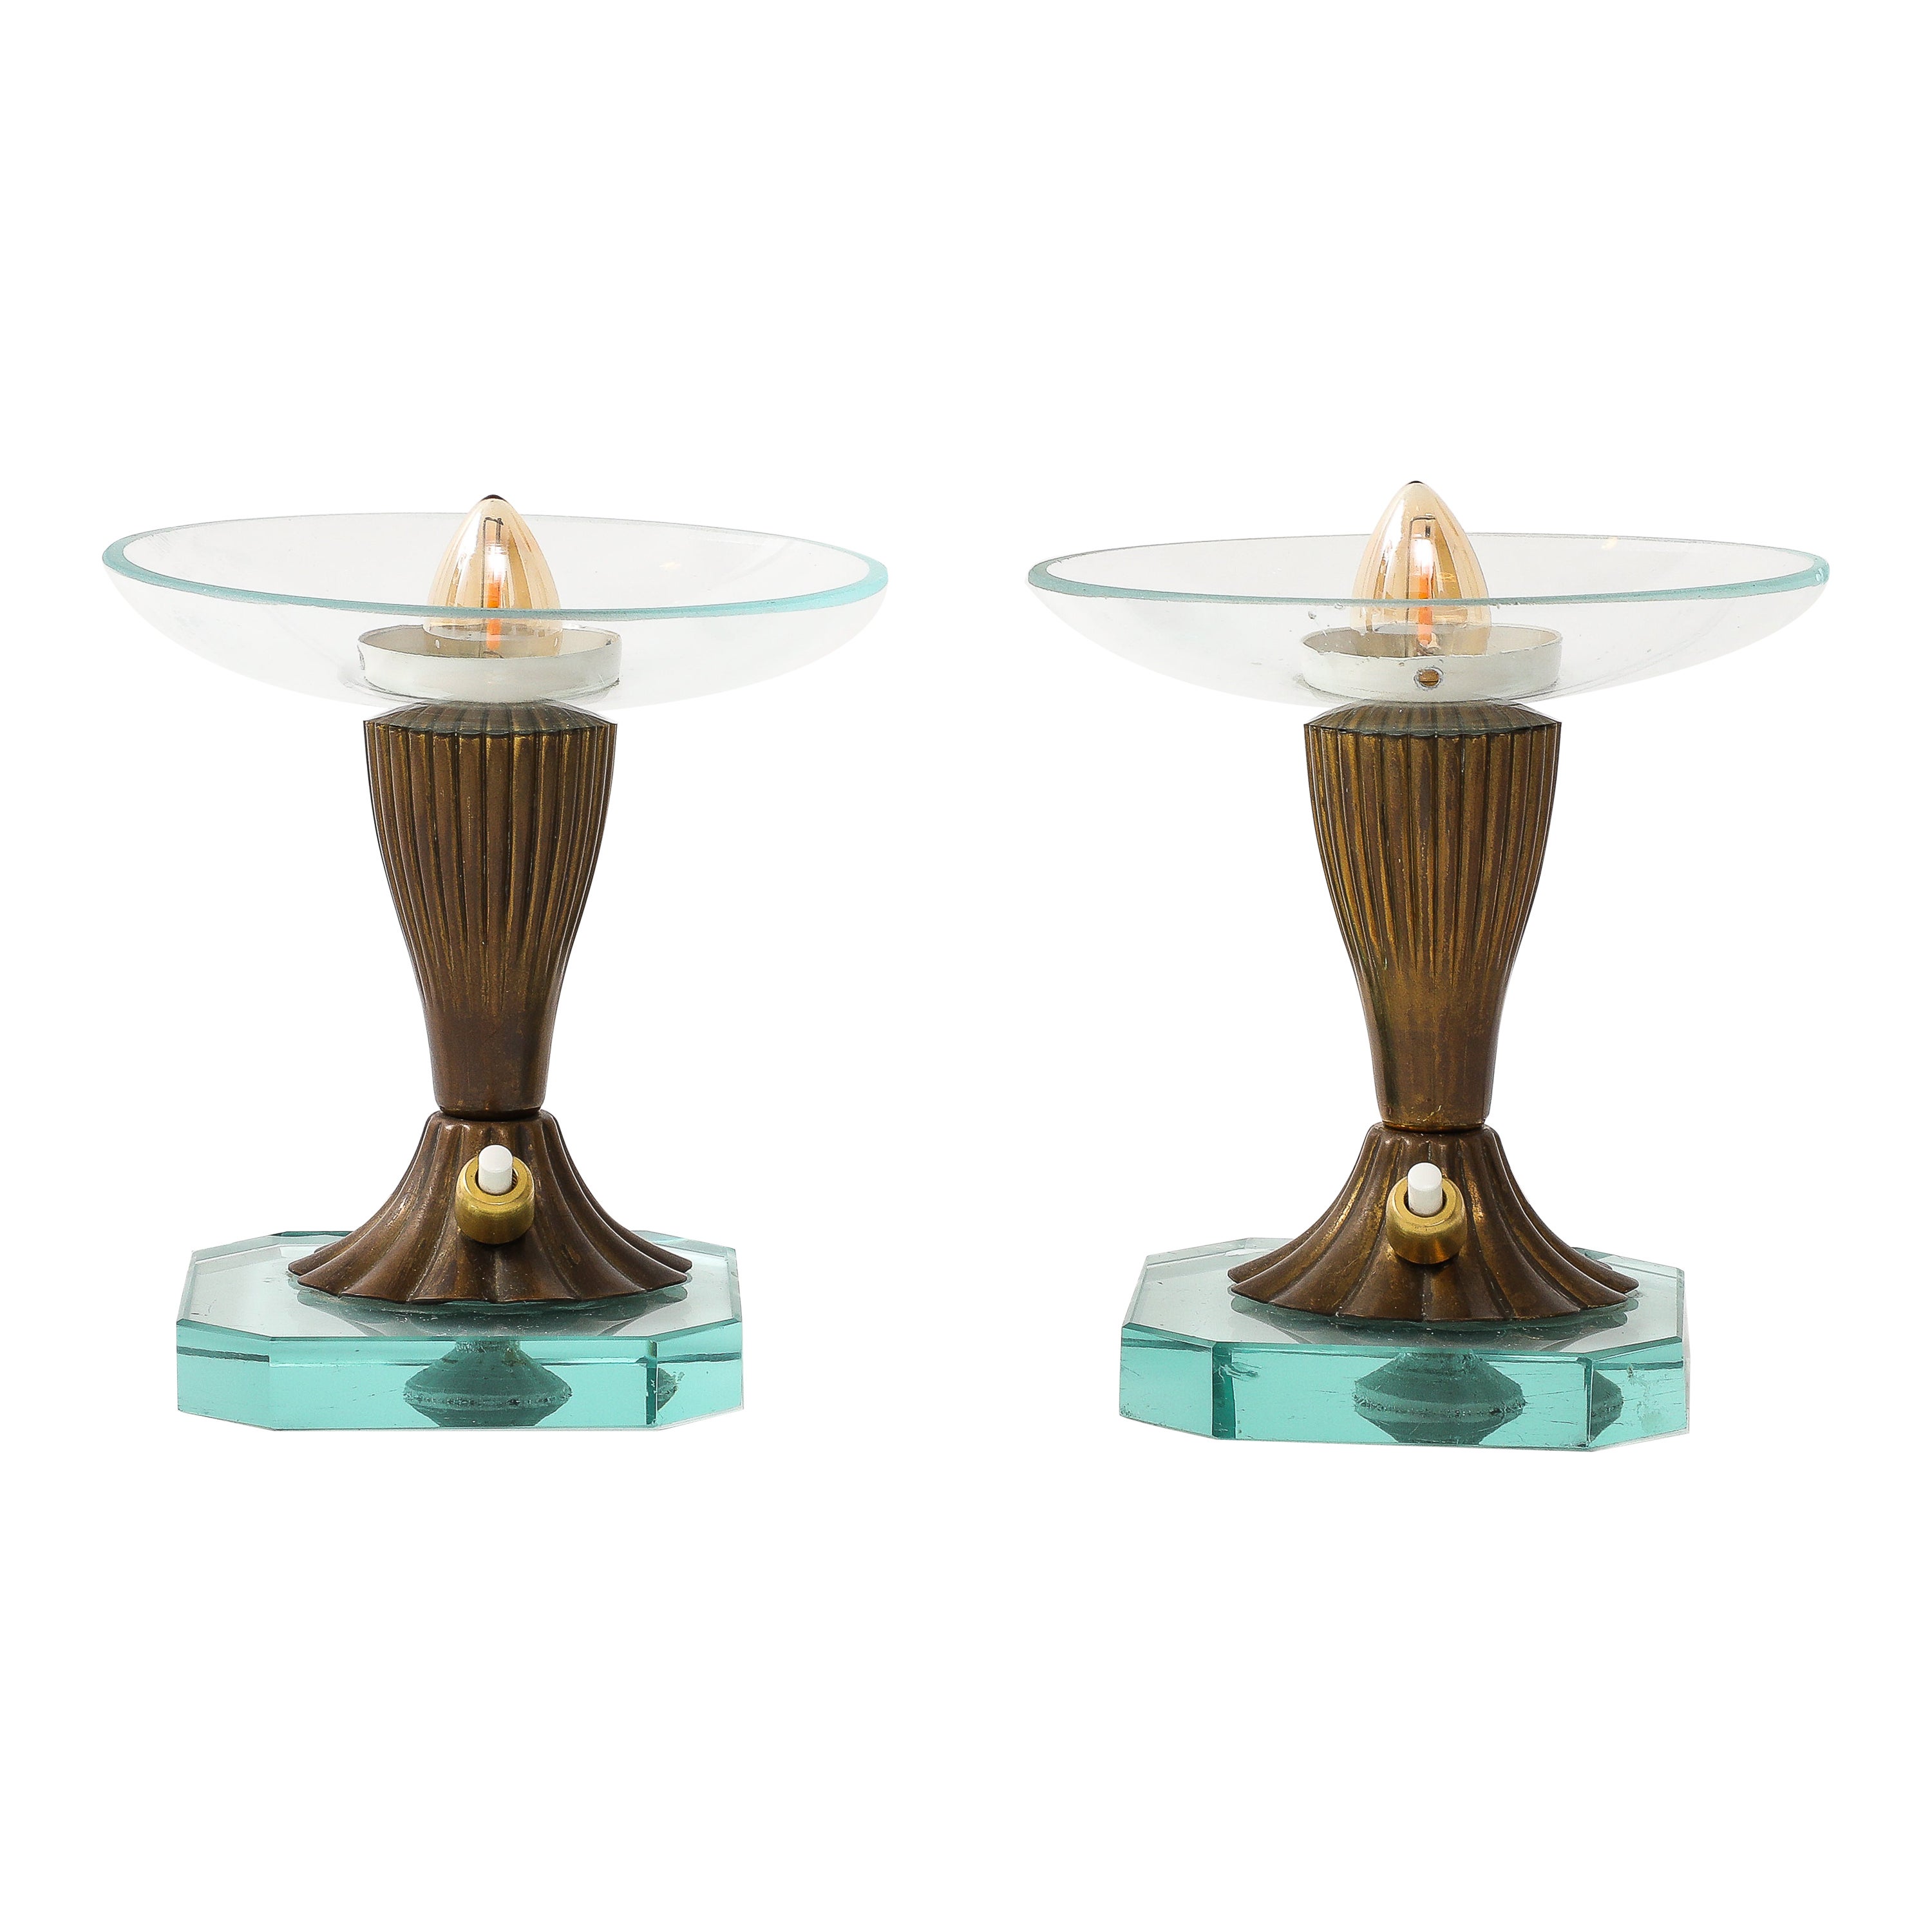 Pair of Glass & Brass Petite Table Lamps att. Pietro Chiesa - Italy 1940's